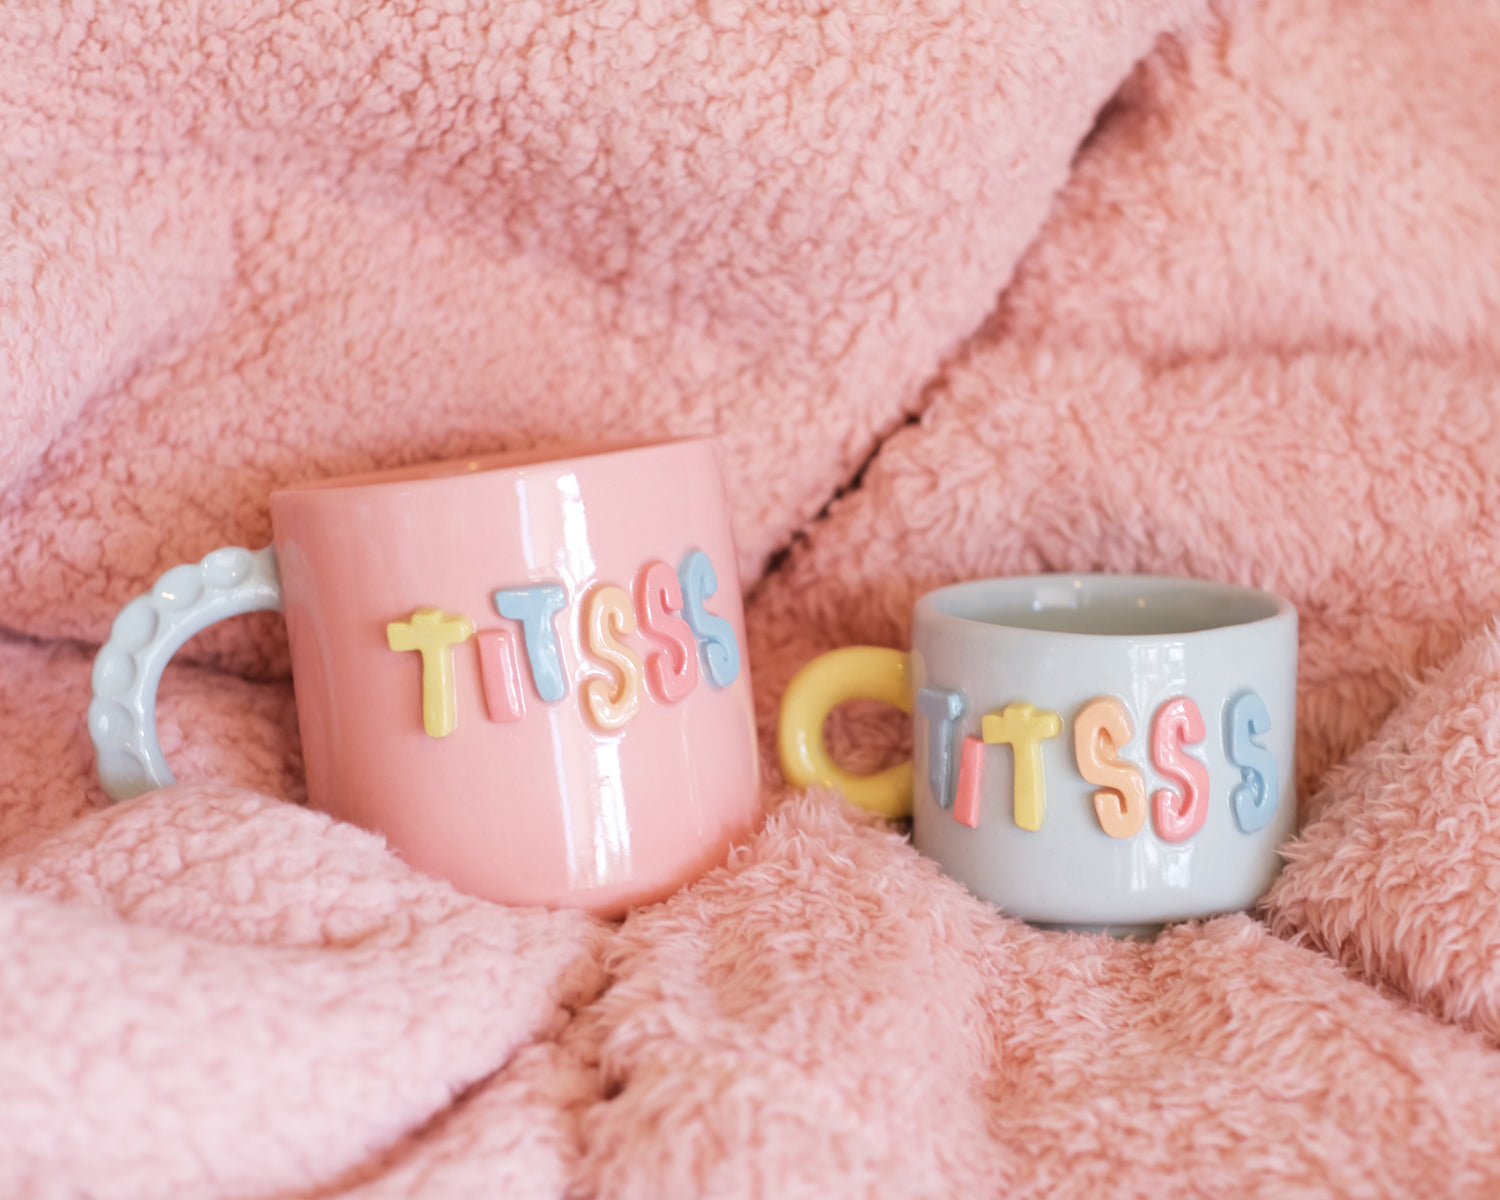 PRE-ORDER Titsss - Big mug